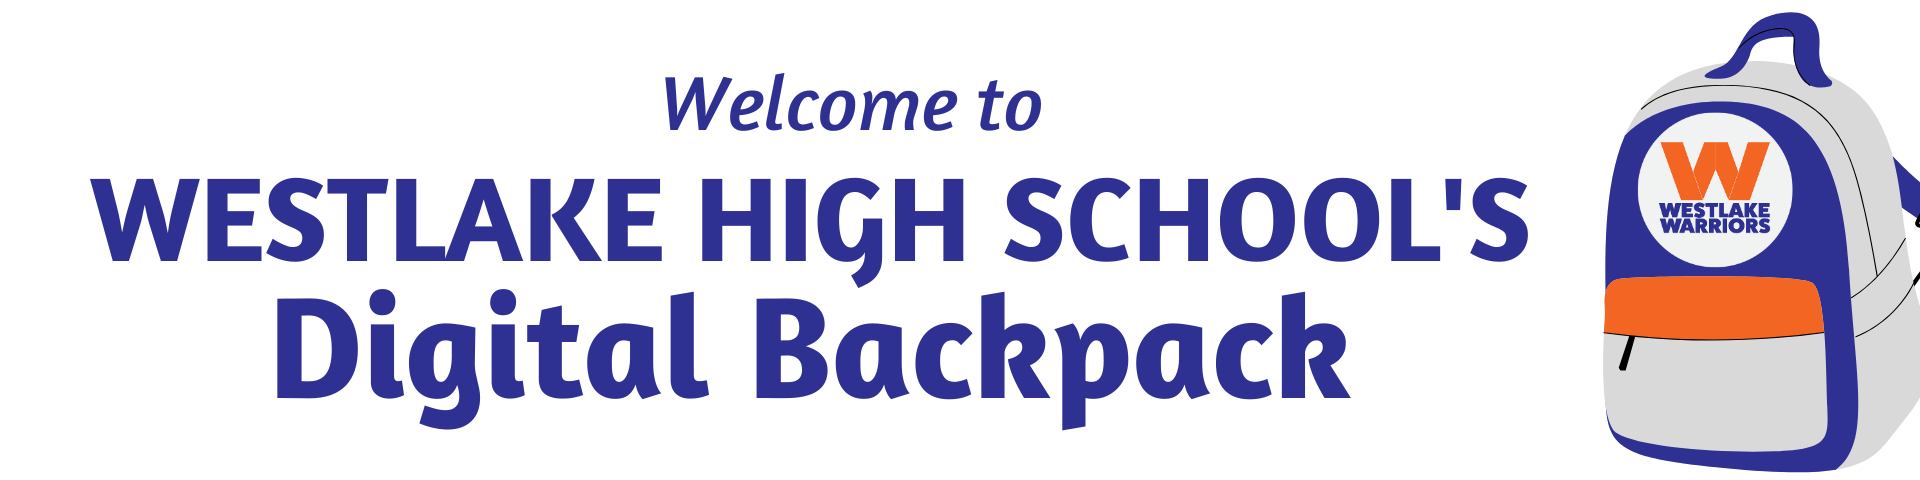 Welcome to Westlake High School's Digital Backpack